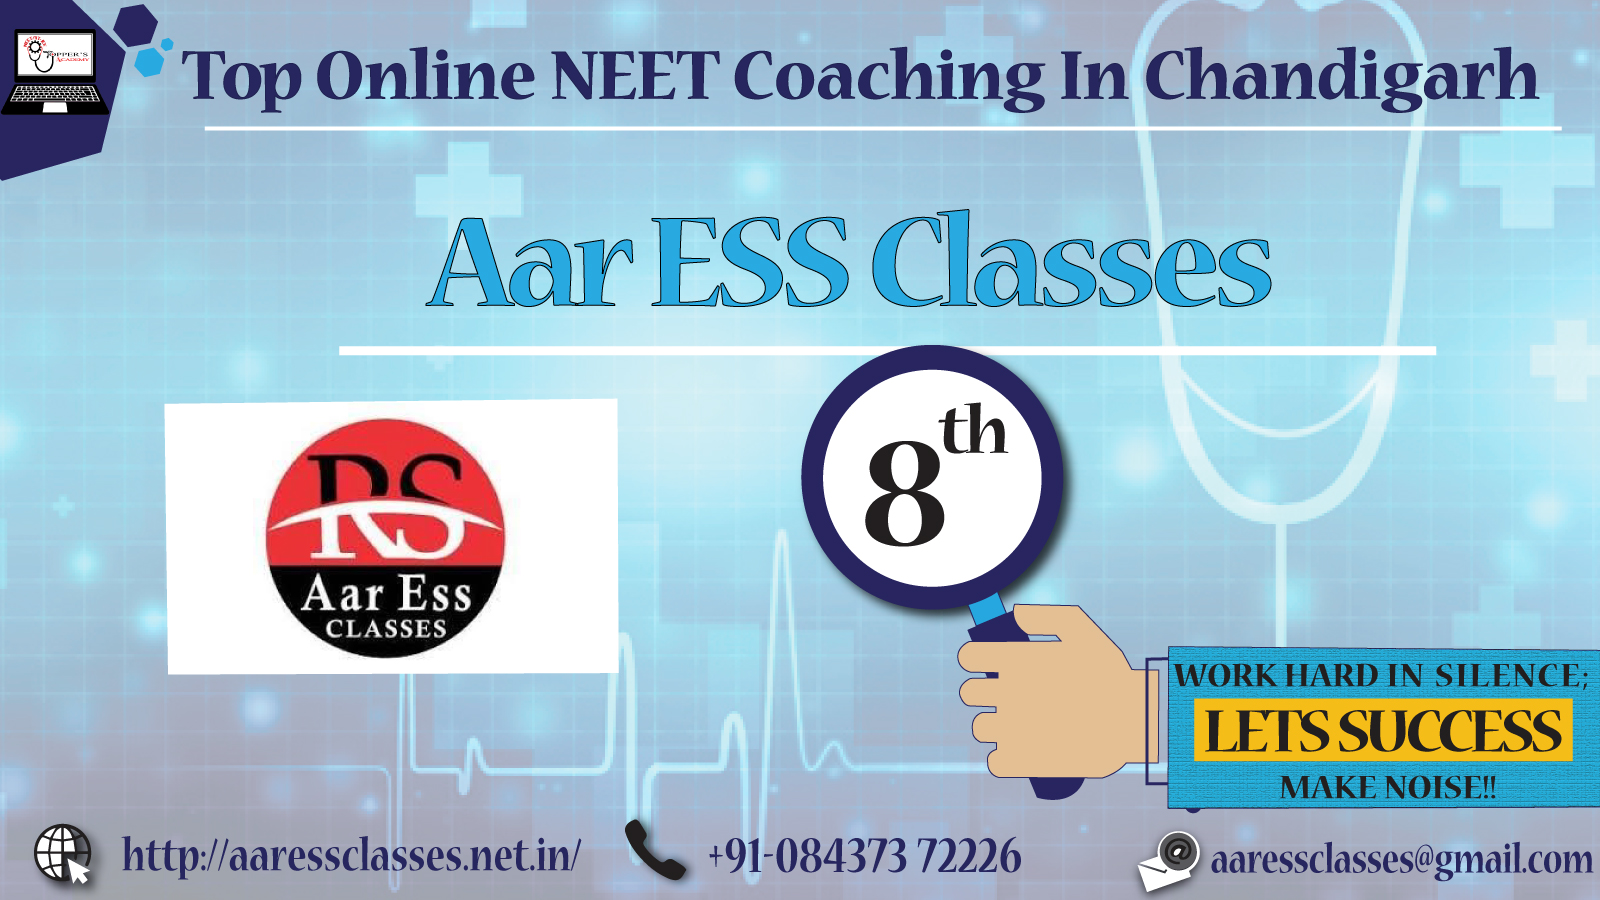 Best Online Neet coaching in chandigarh